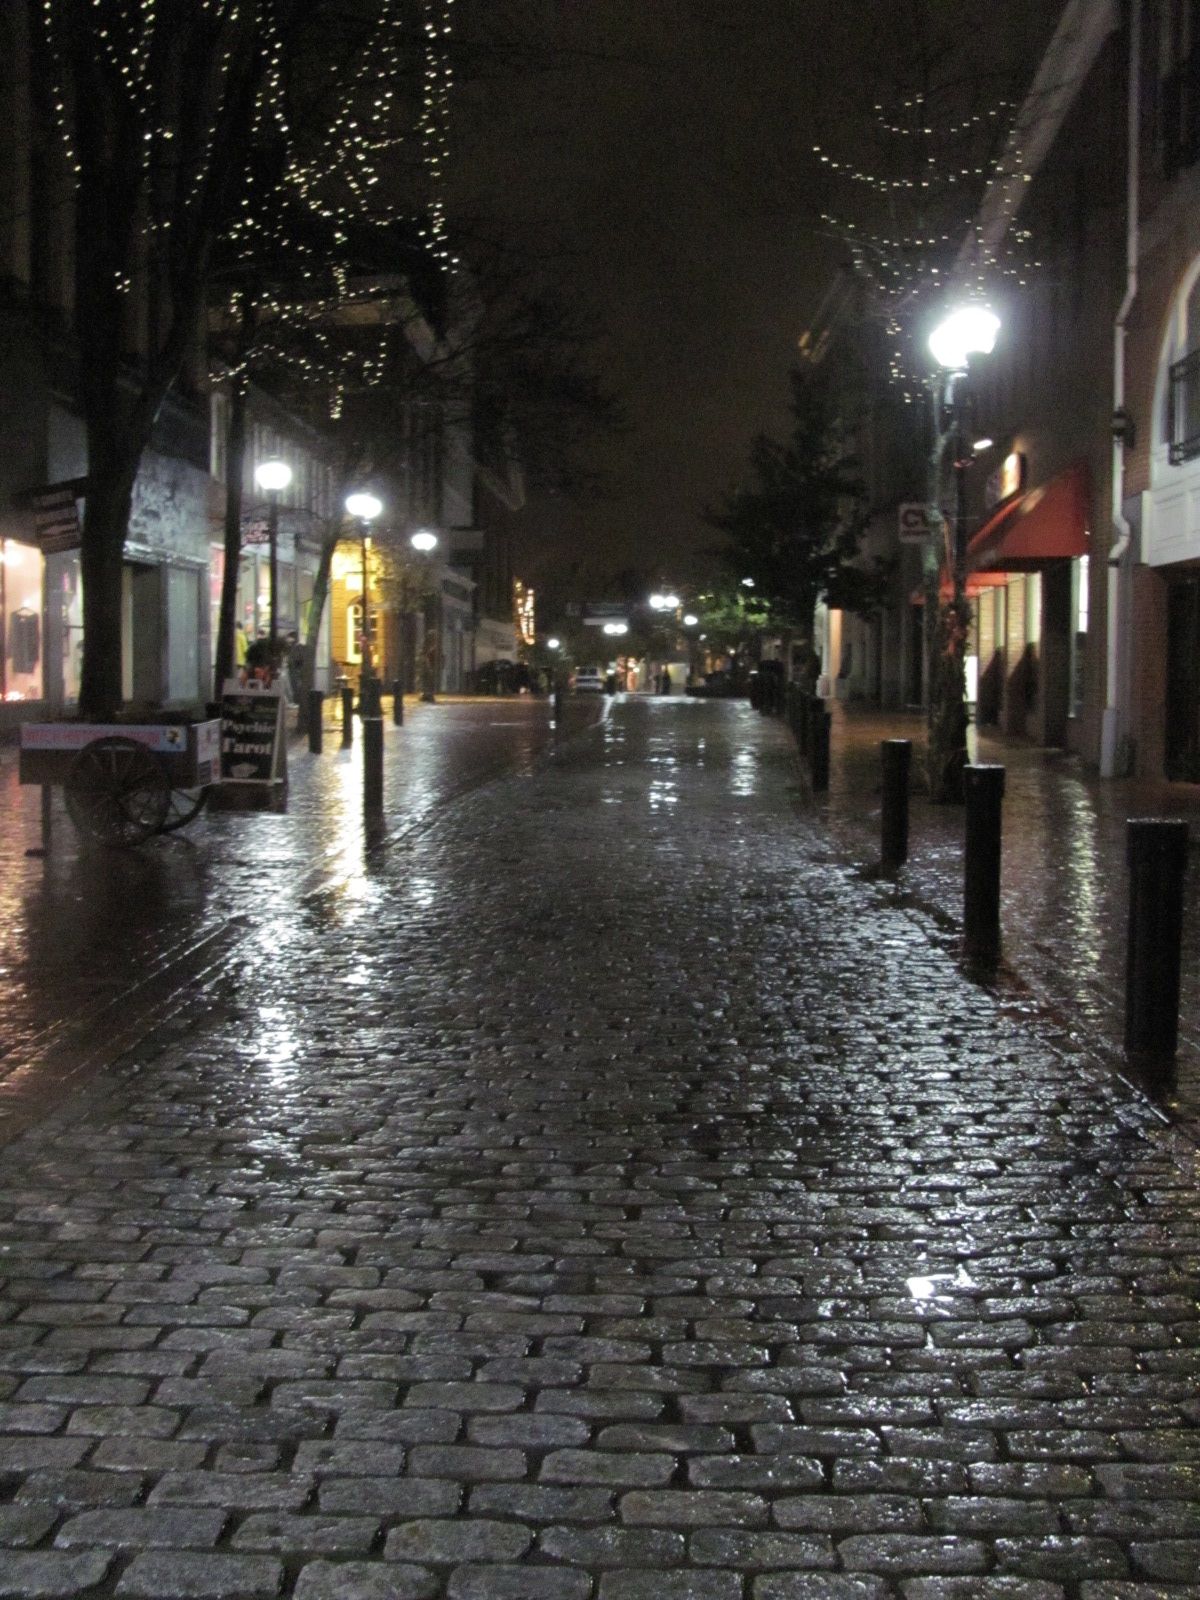 night scene of wet brick city street, light shines in